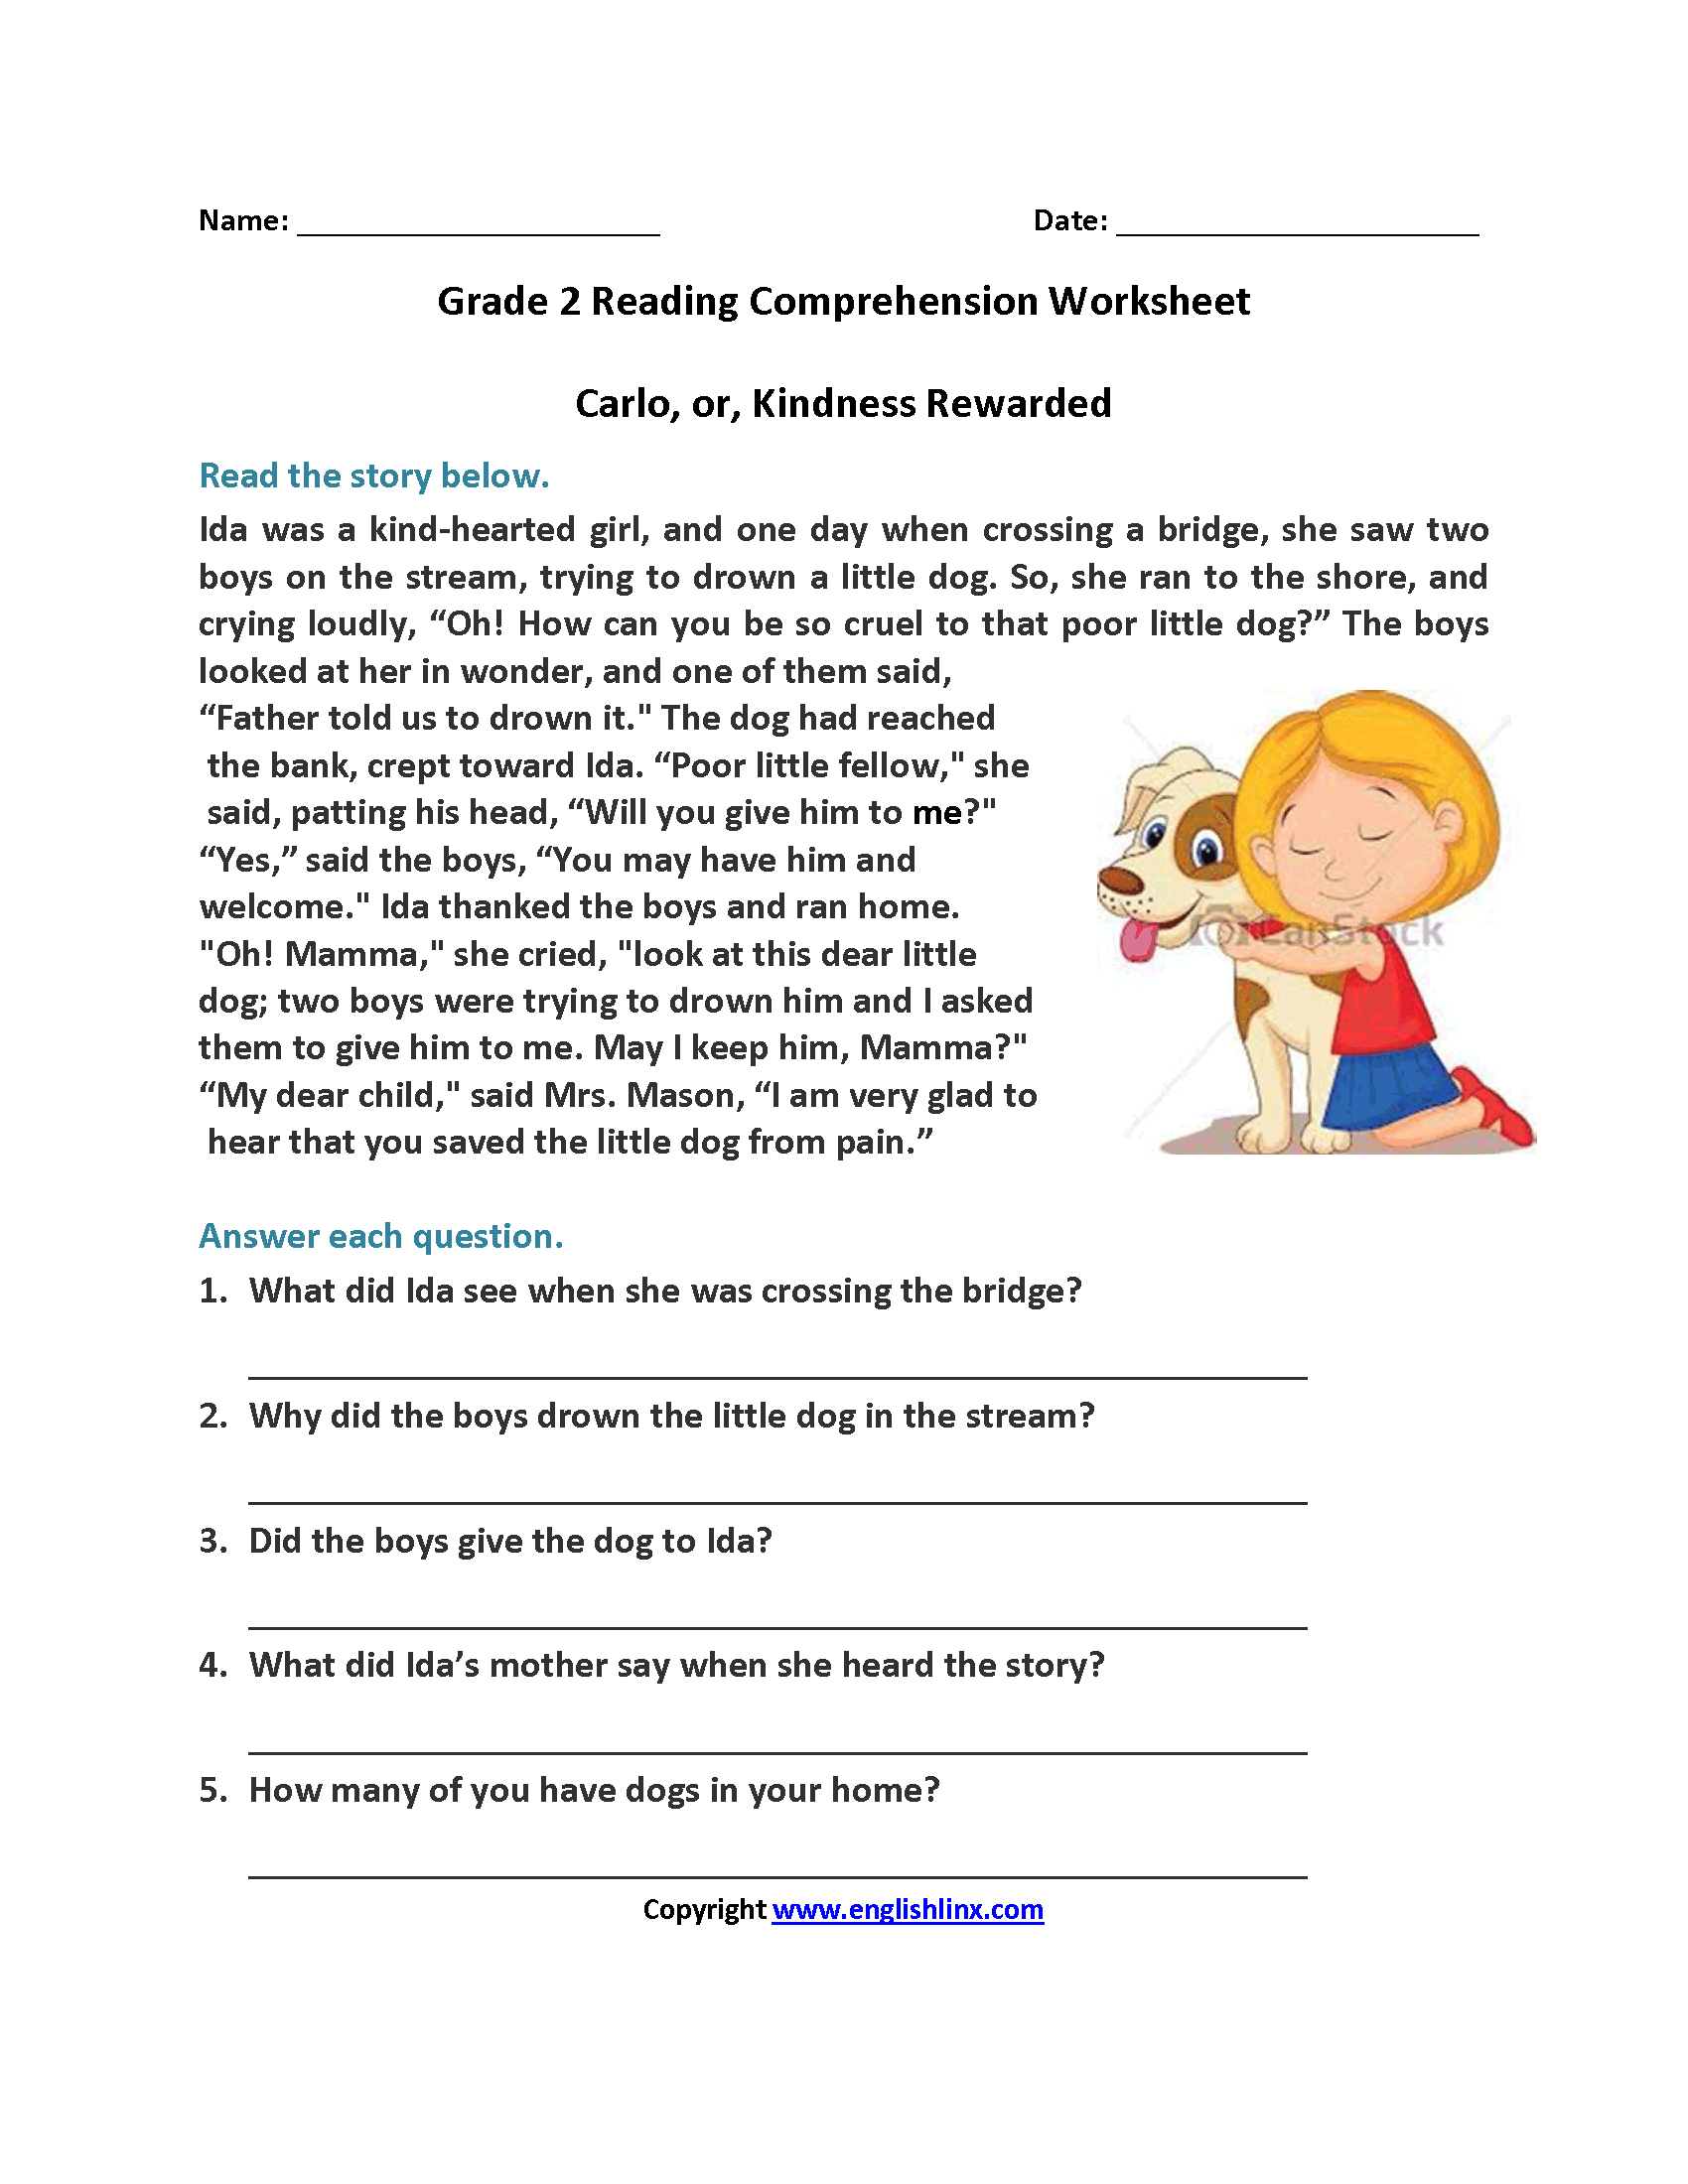 Carlo Or Kindness Rewarded Second Grade Reading Worksheets | Reading | Second Grade Reading Comprehension Printable Worksheets